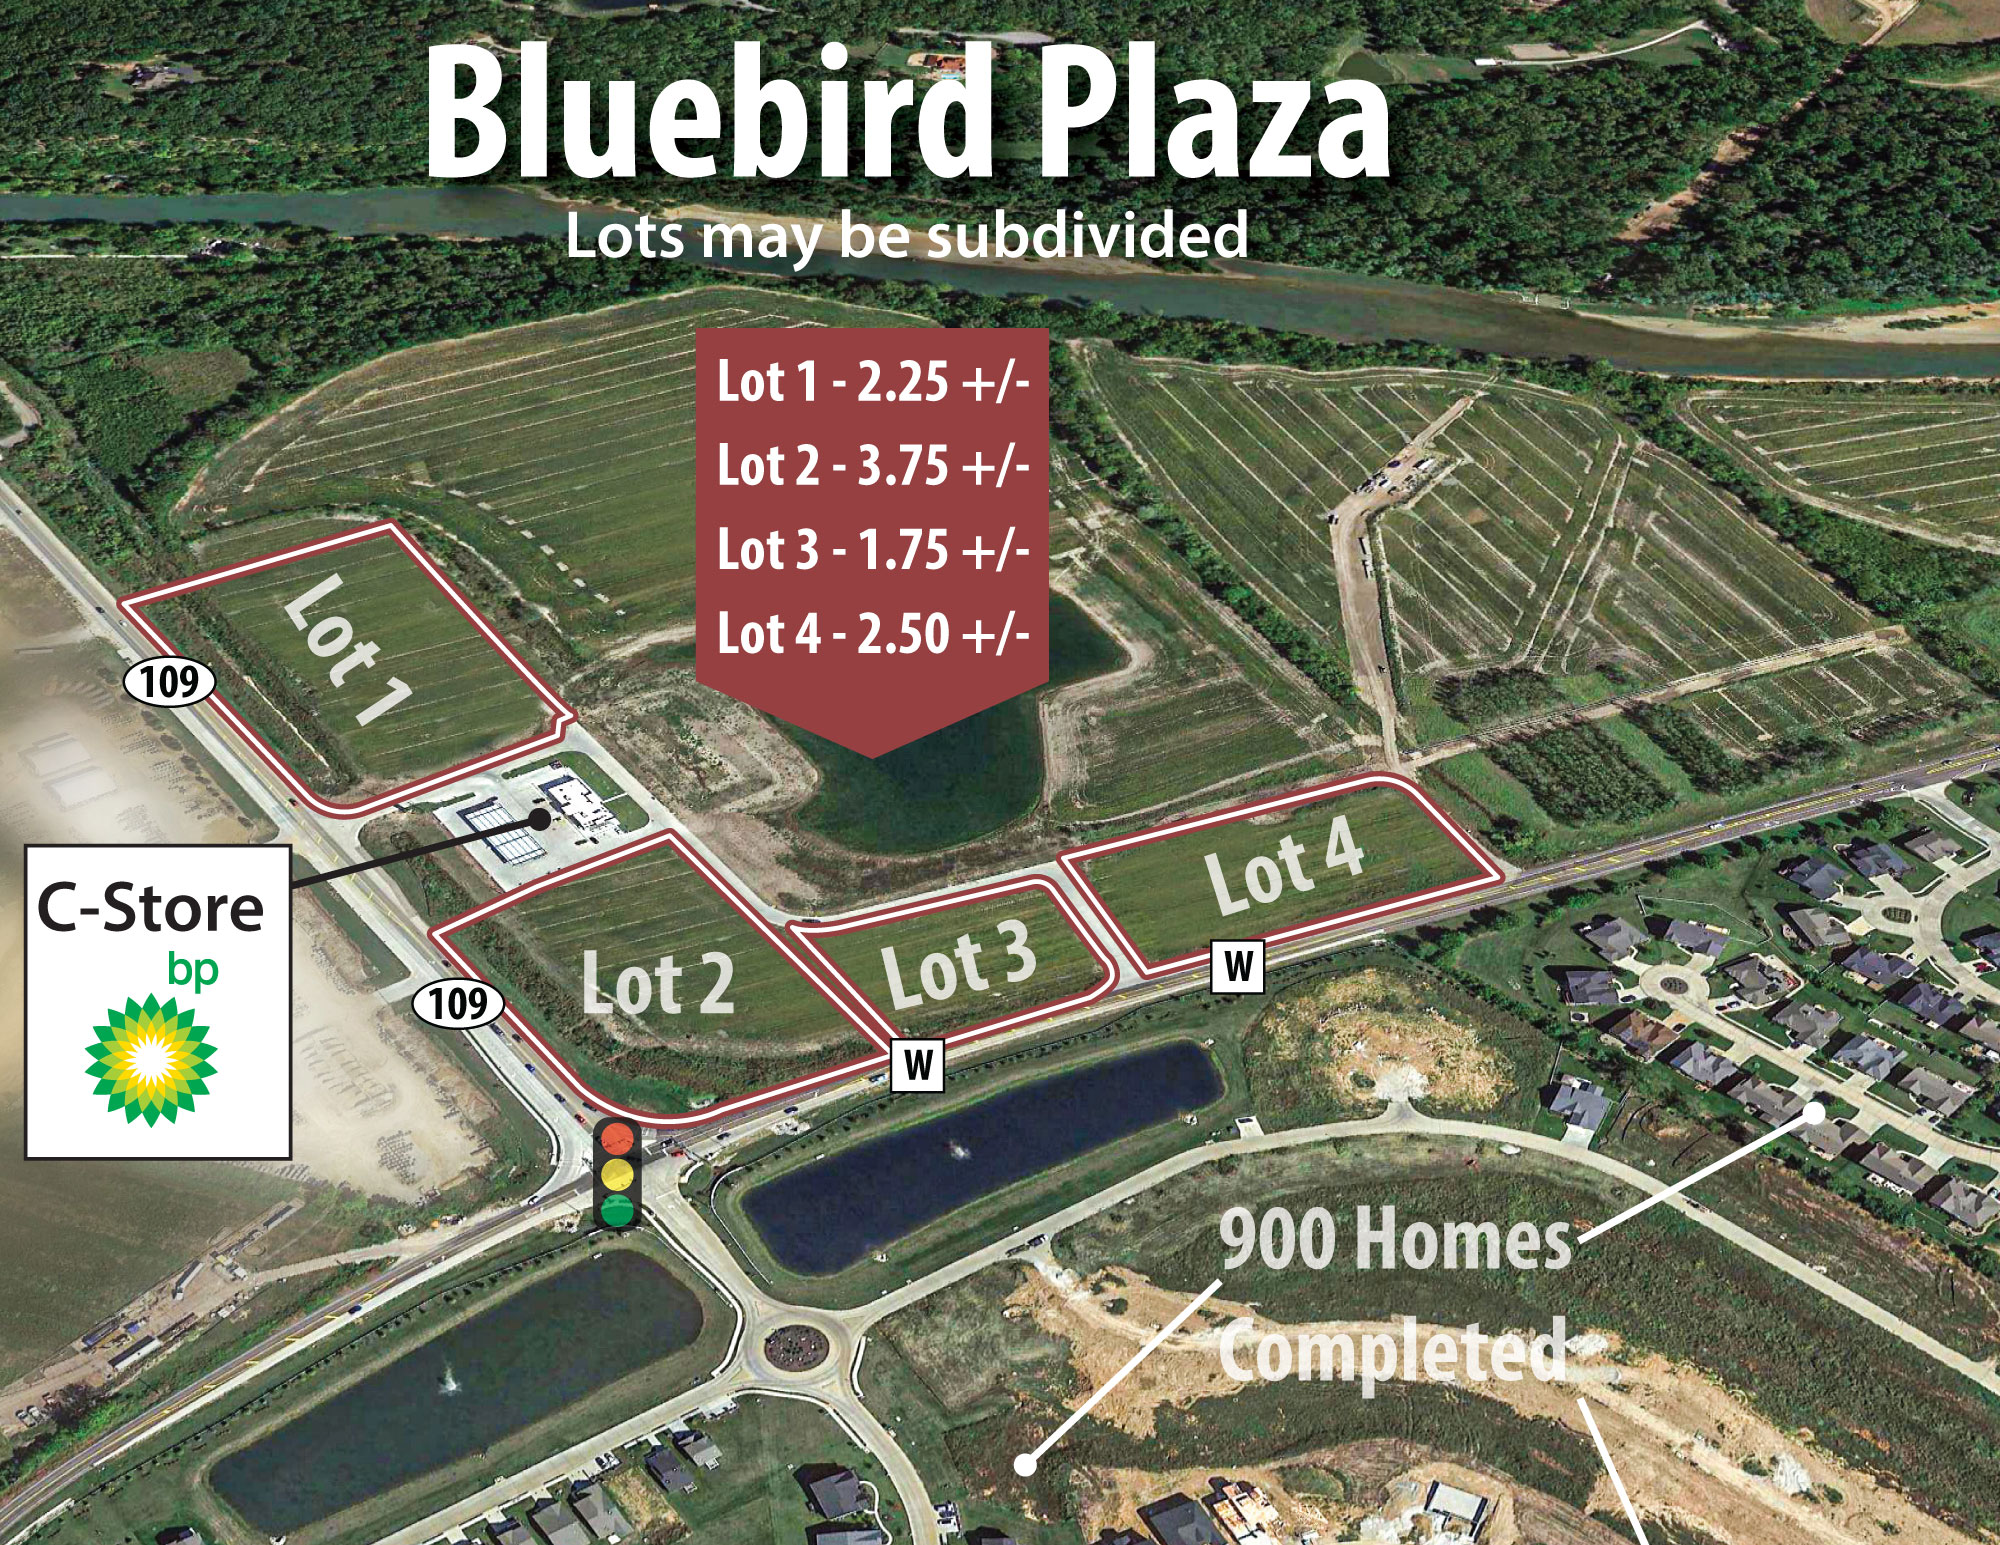 BlueBird Plaza